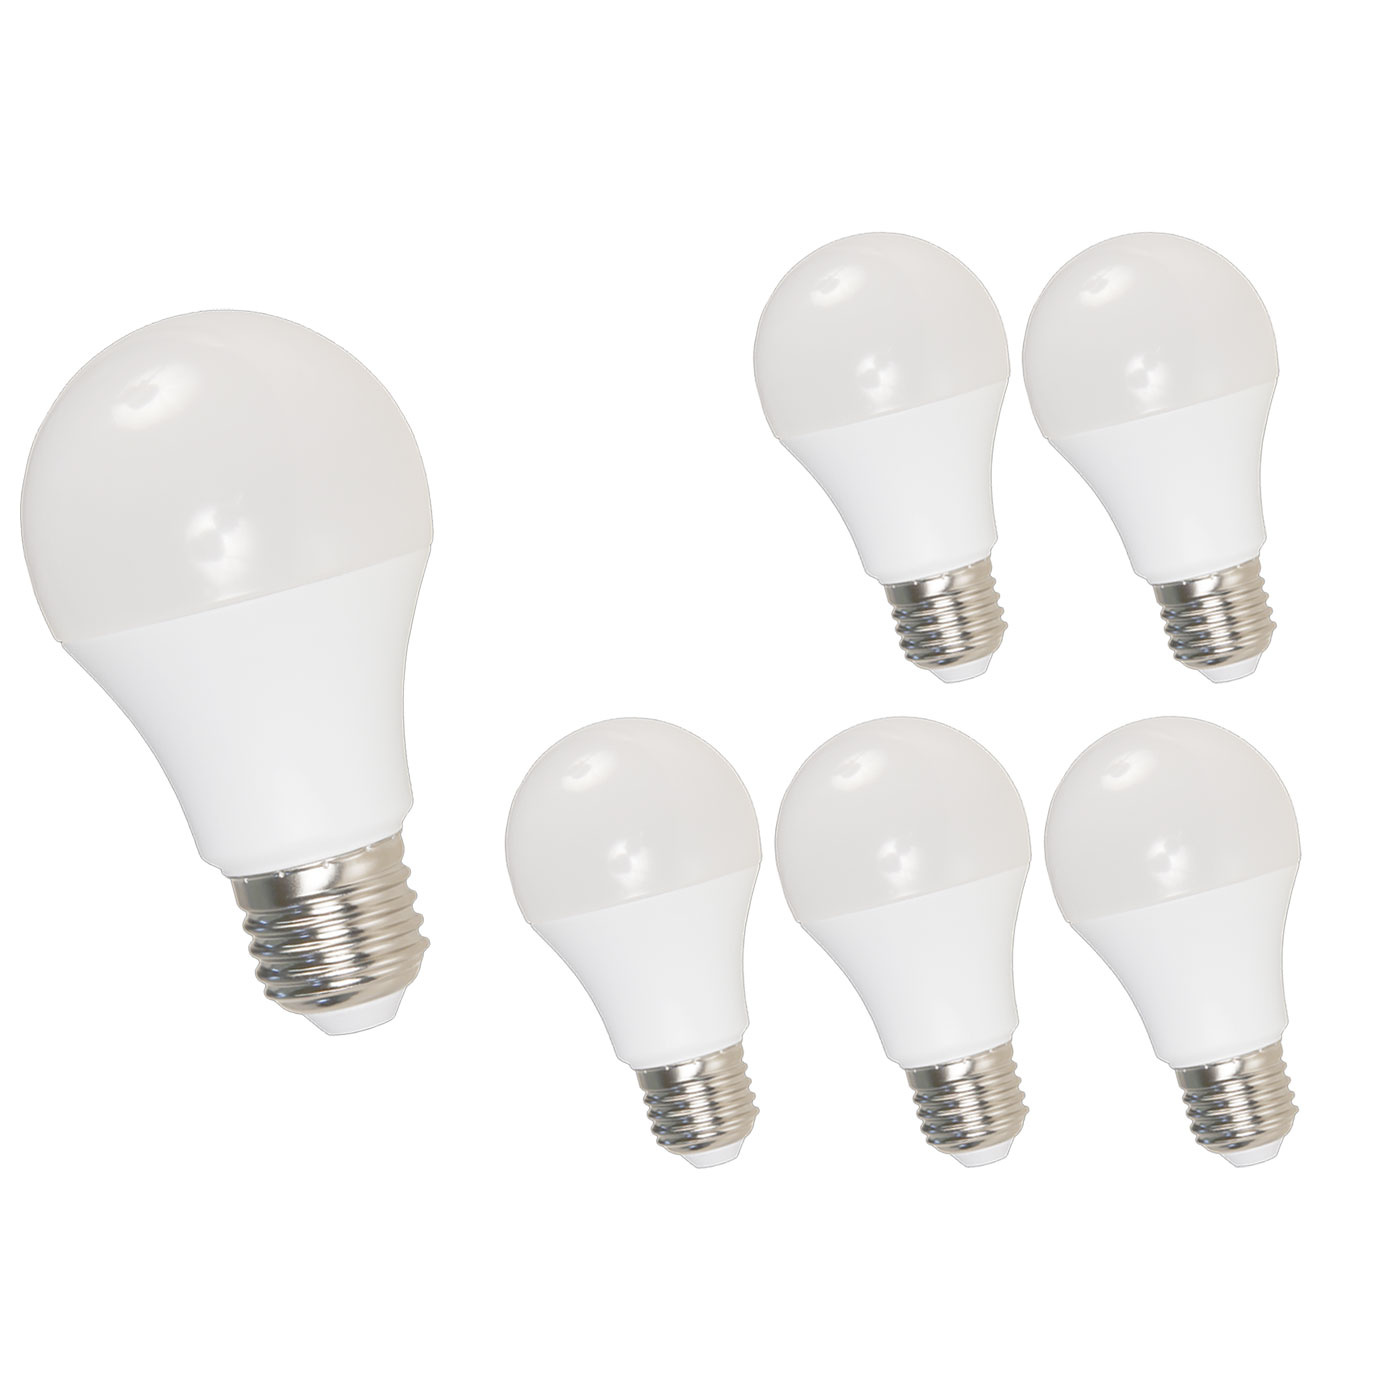 LED lamp E27- A60 - 7W vervangt 70W - 3000K 